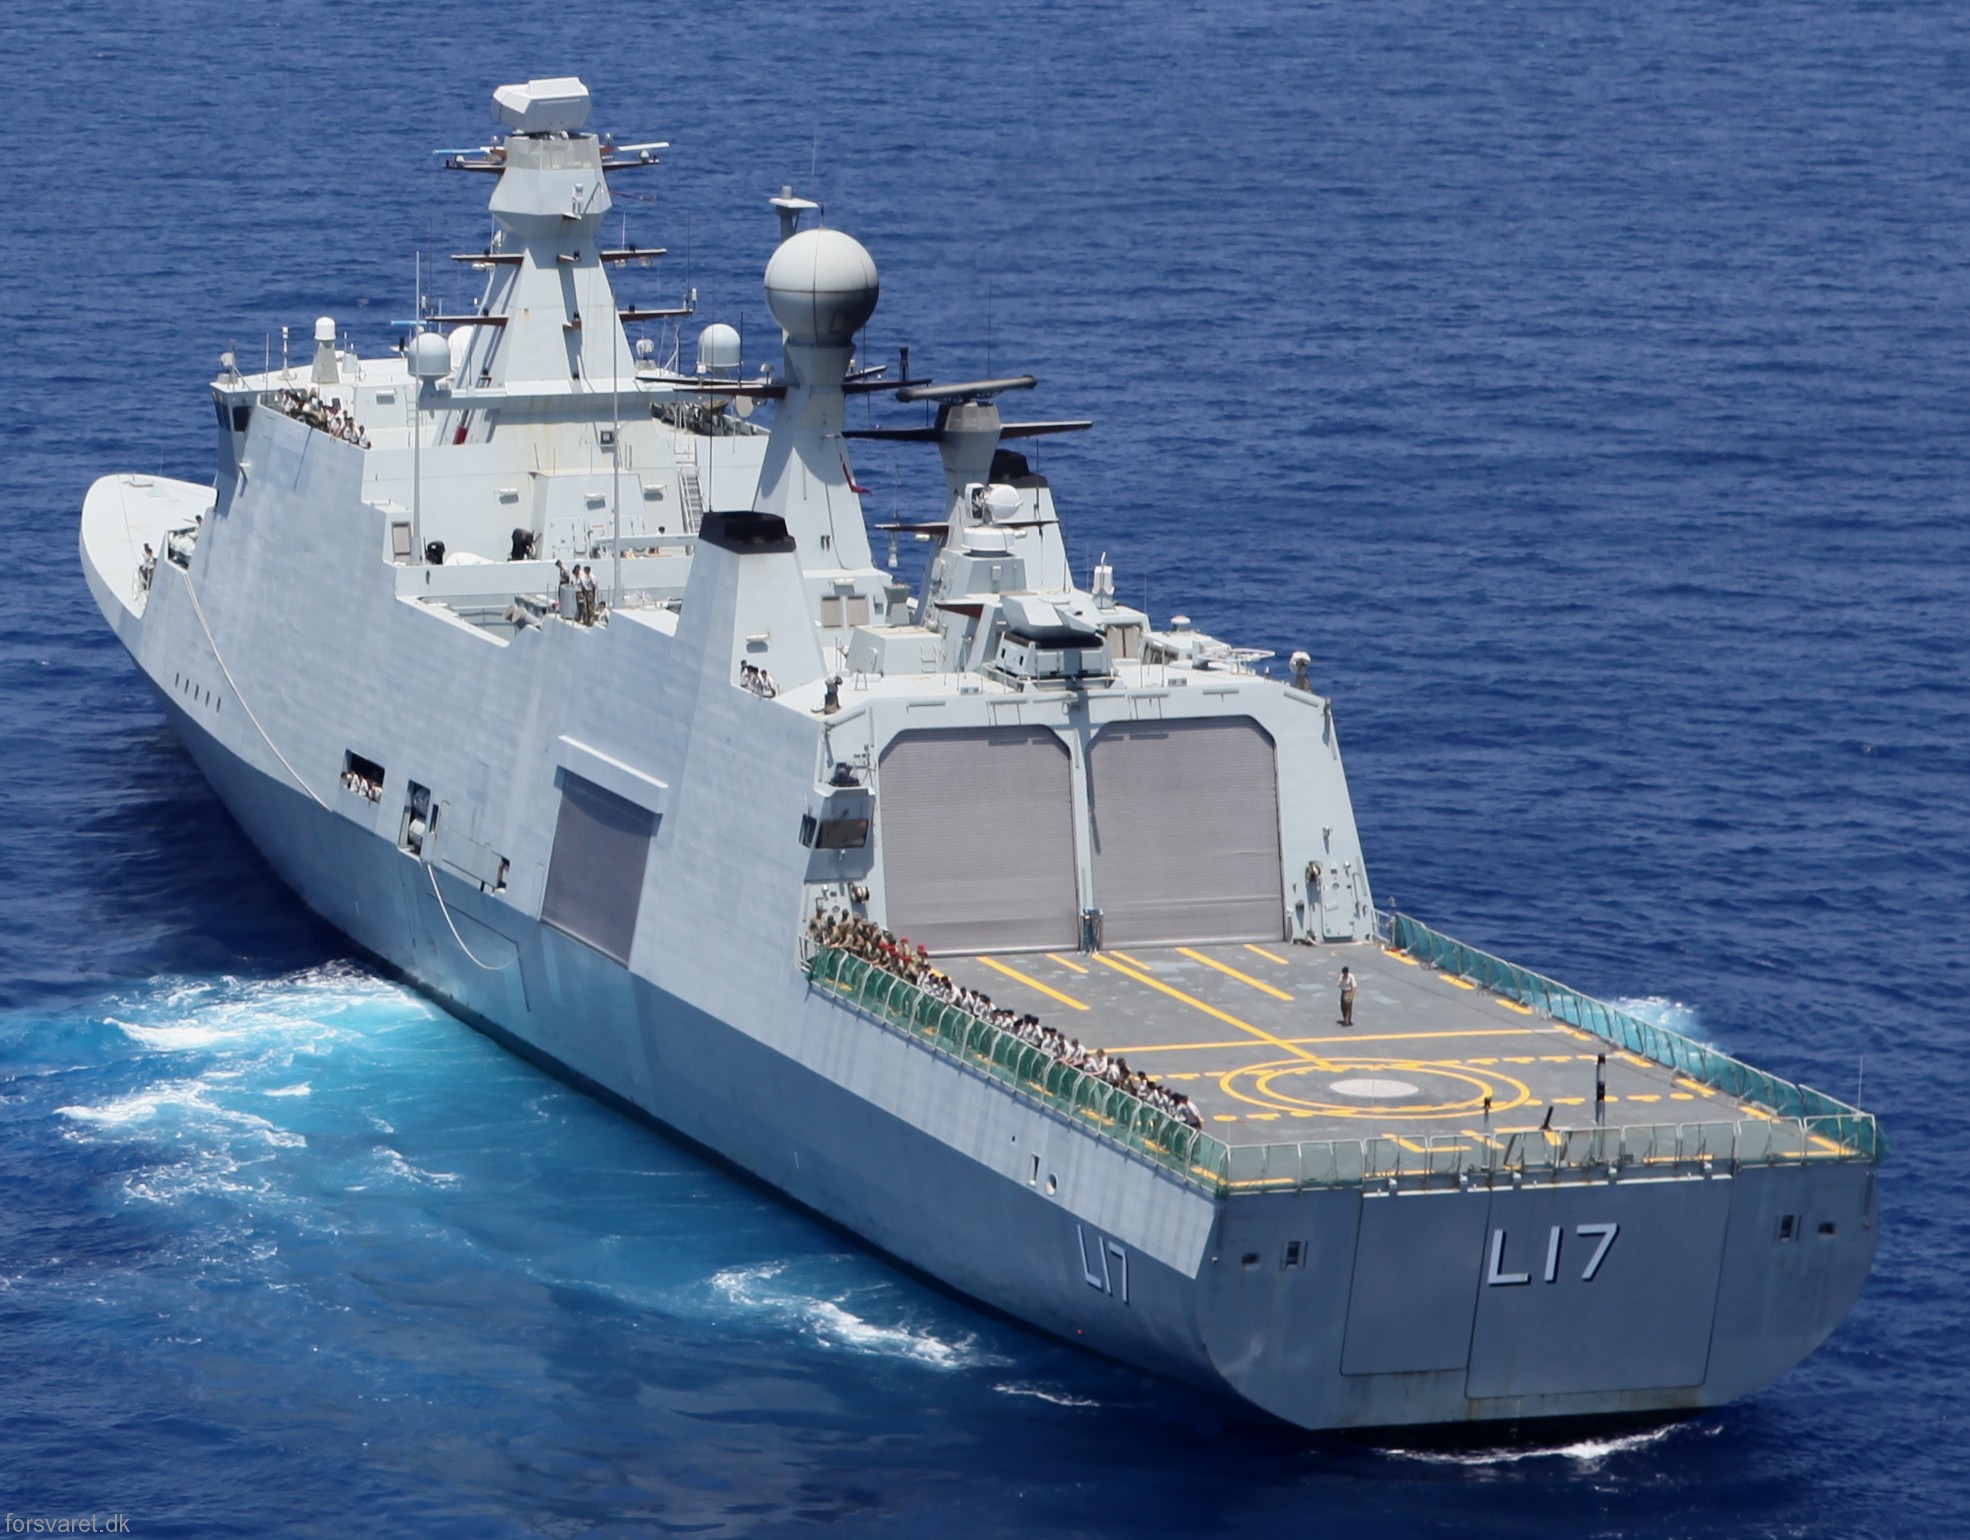 f-342 hdms esbern snare l-17 frigate command support ship royal danish navy 22